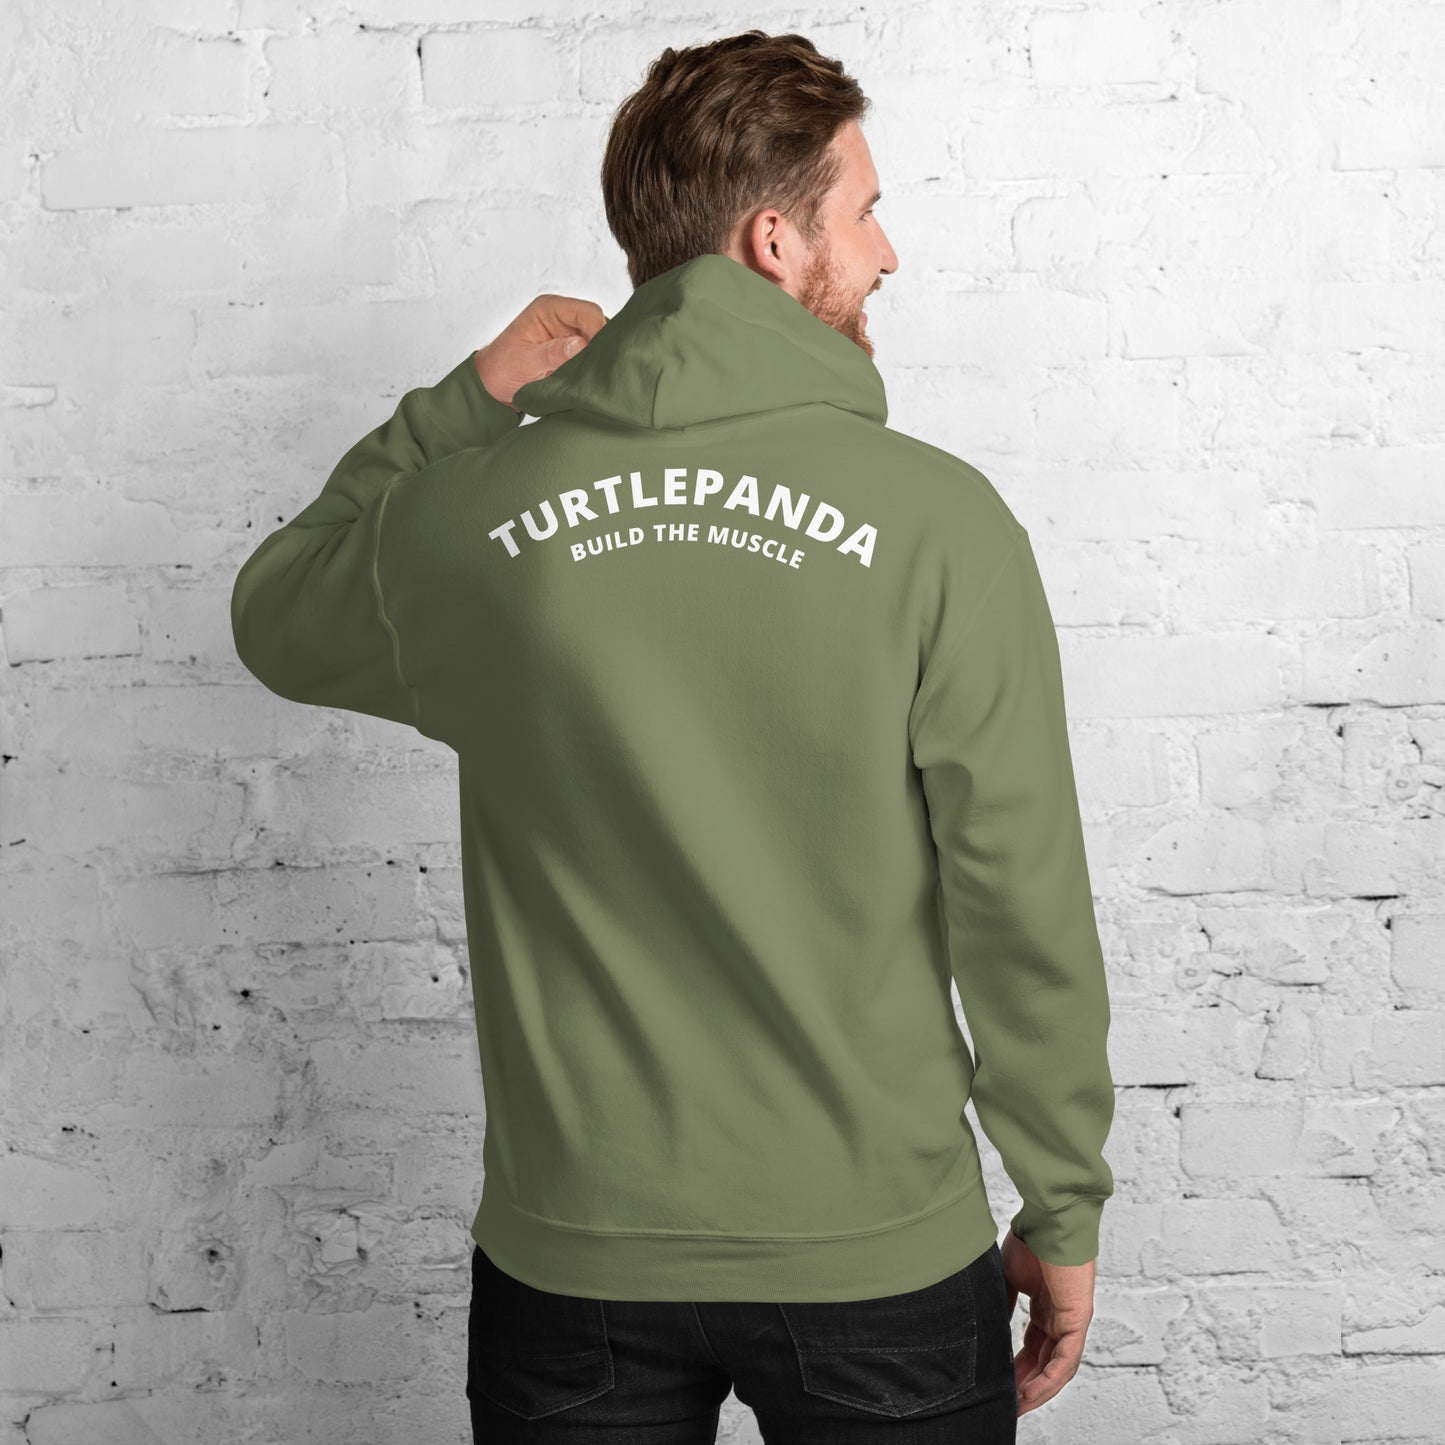 turtlepanda - hoodies for men - men tshirts - shirts - graphic tees - hoodies - workout - gym - healthy